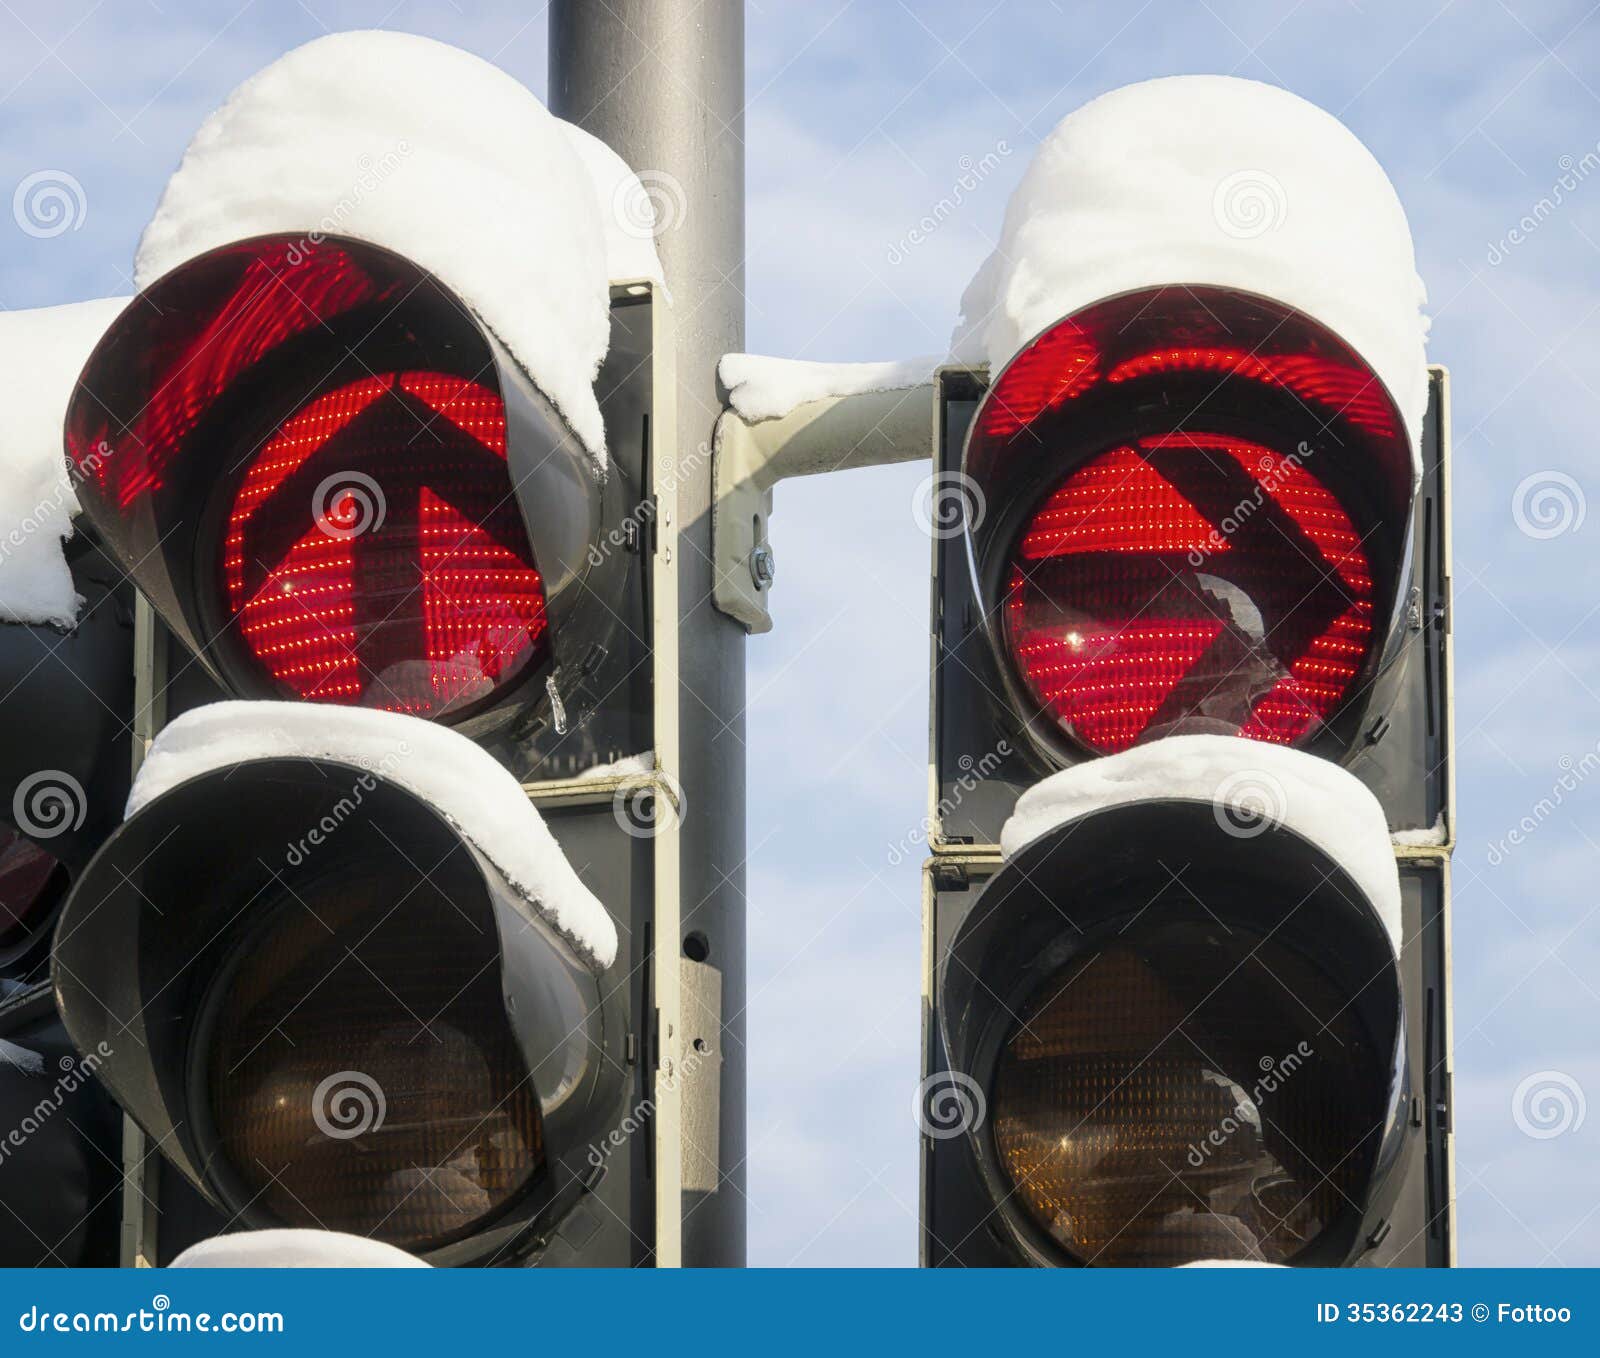 traffic-lights-two-red-arrow-signs-35362243.jpg